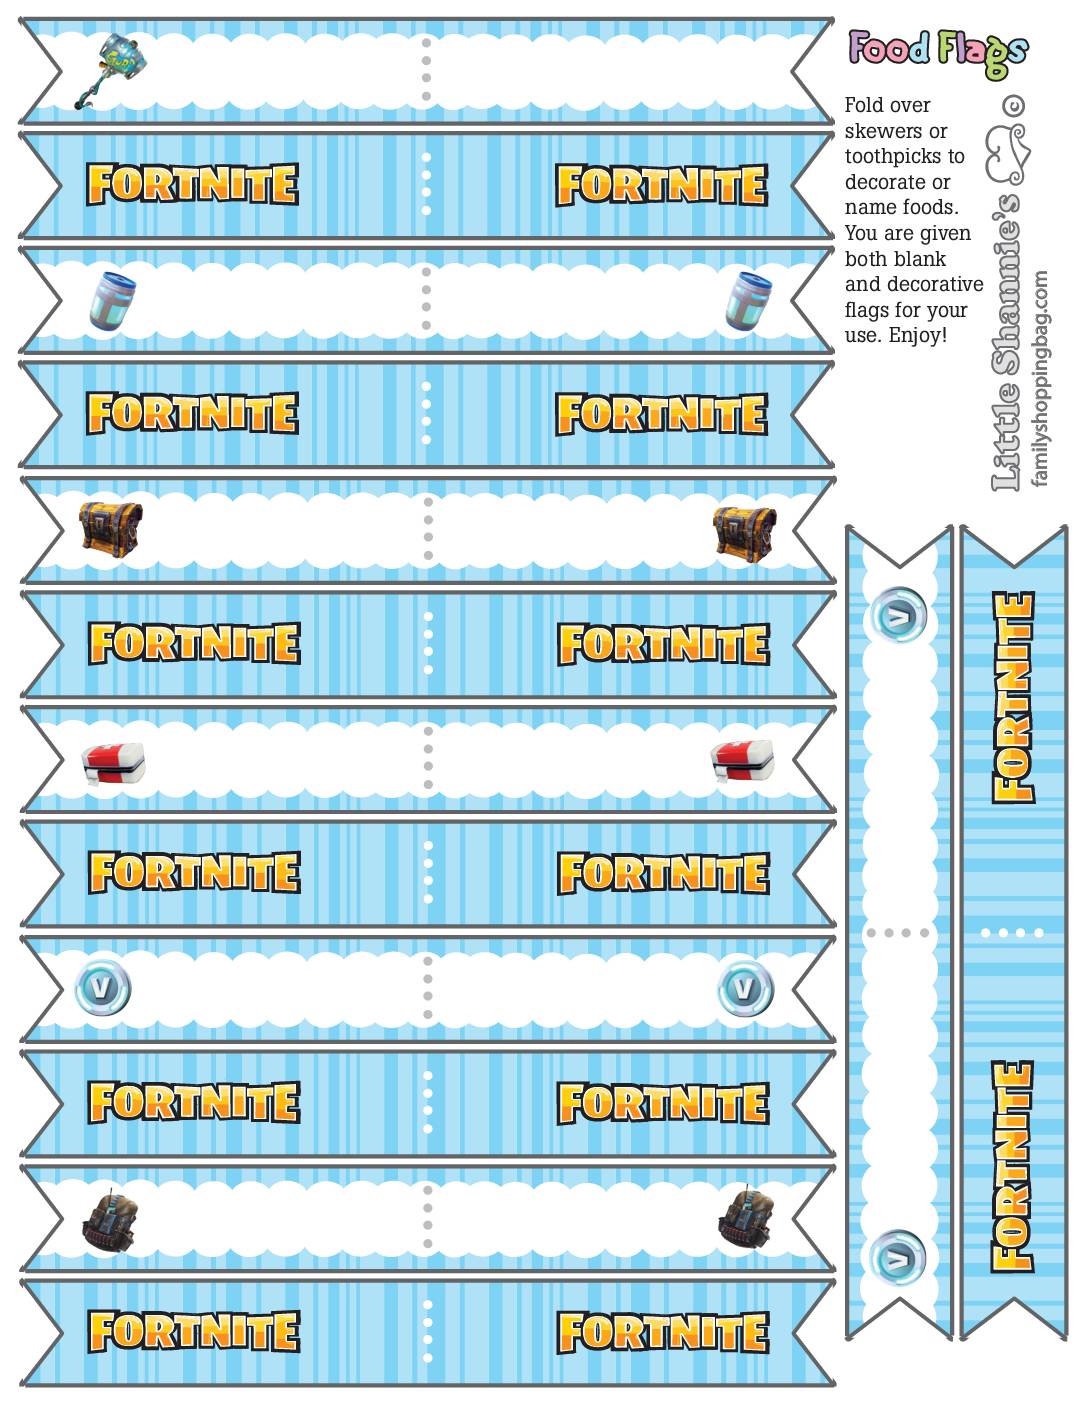 Food Flags Fortnite  pdf